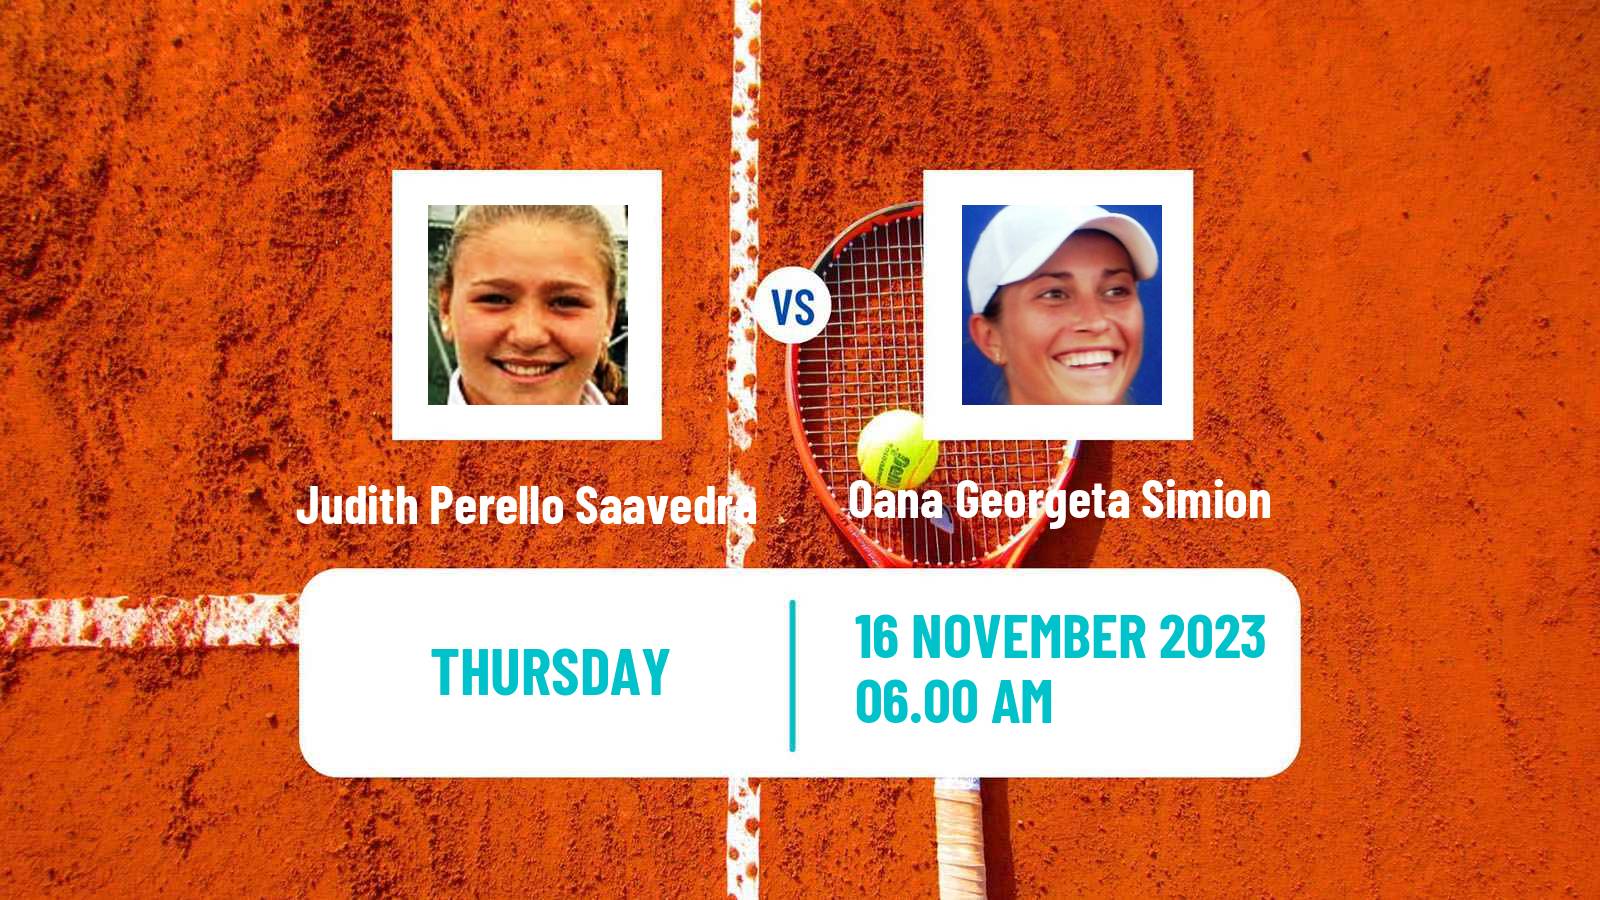 Tennis ITF W15 Nules Women Judith Perello Saavedra - Oana Georgeta Simion